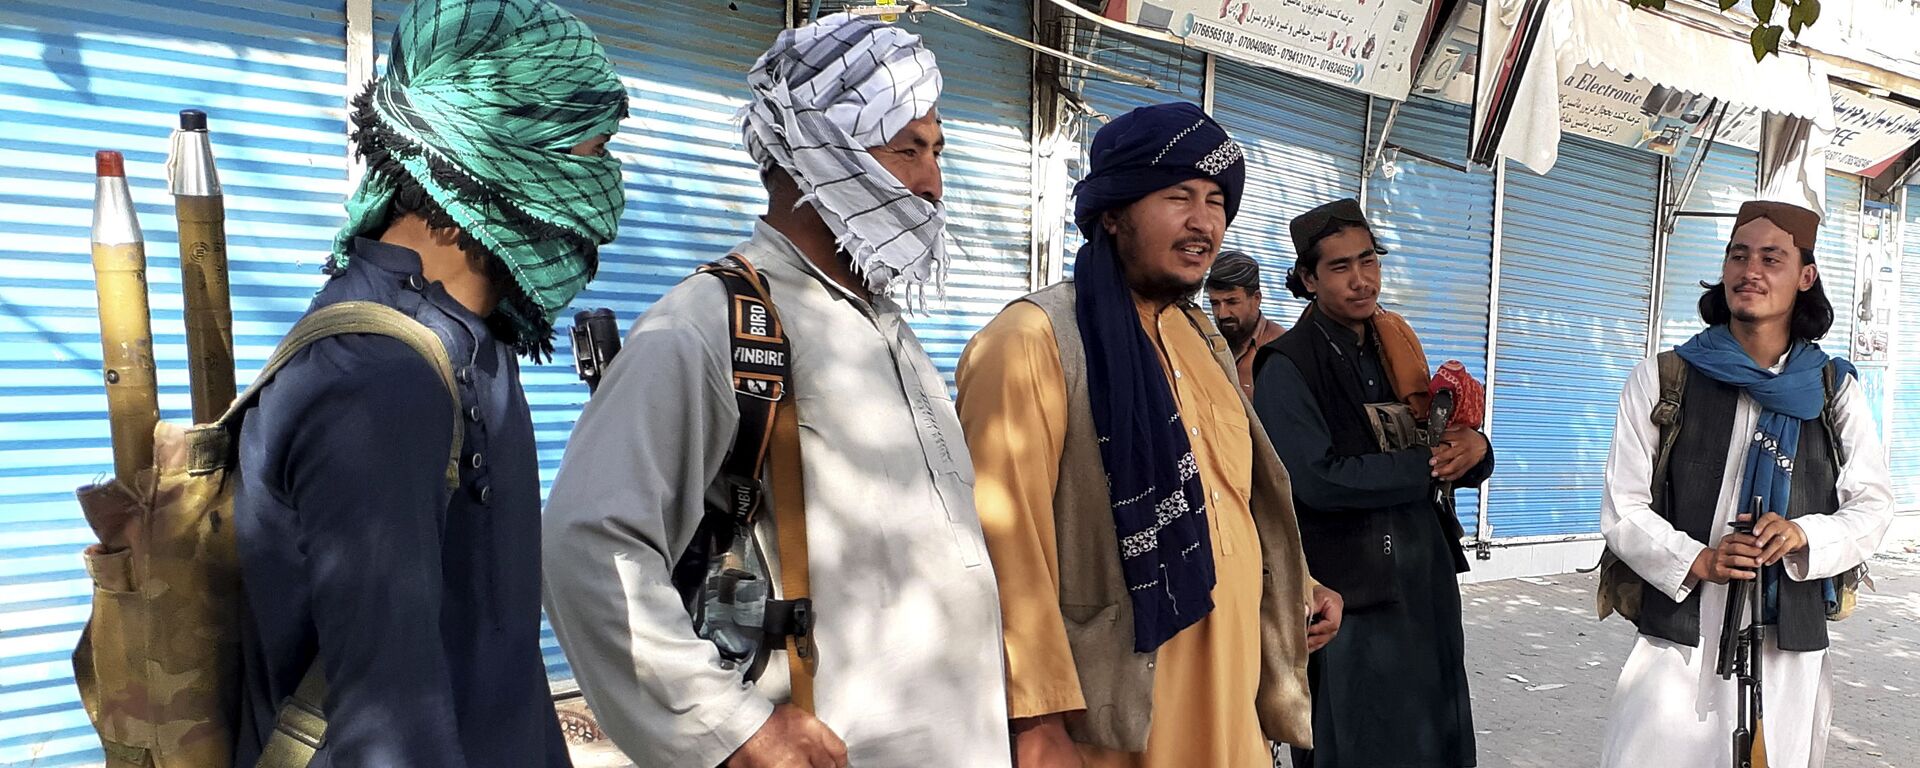 Боевики Талибана* в городе Кундуз, Афганистан - Sputnik Узбекистан, 1920, 28.09.2021